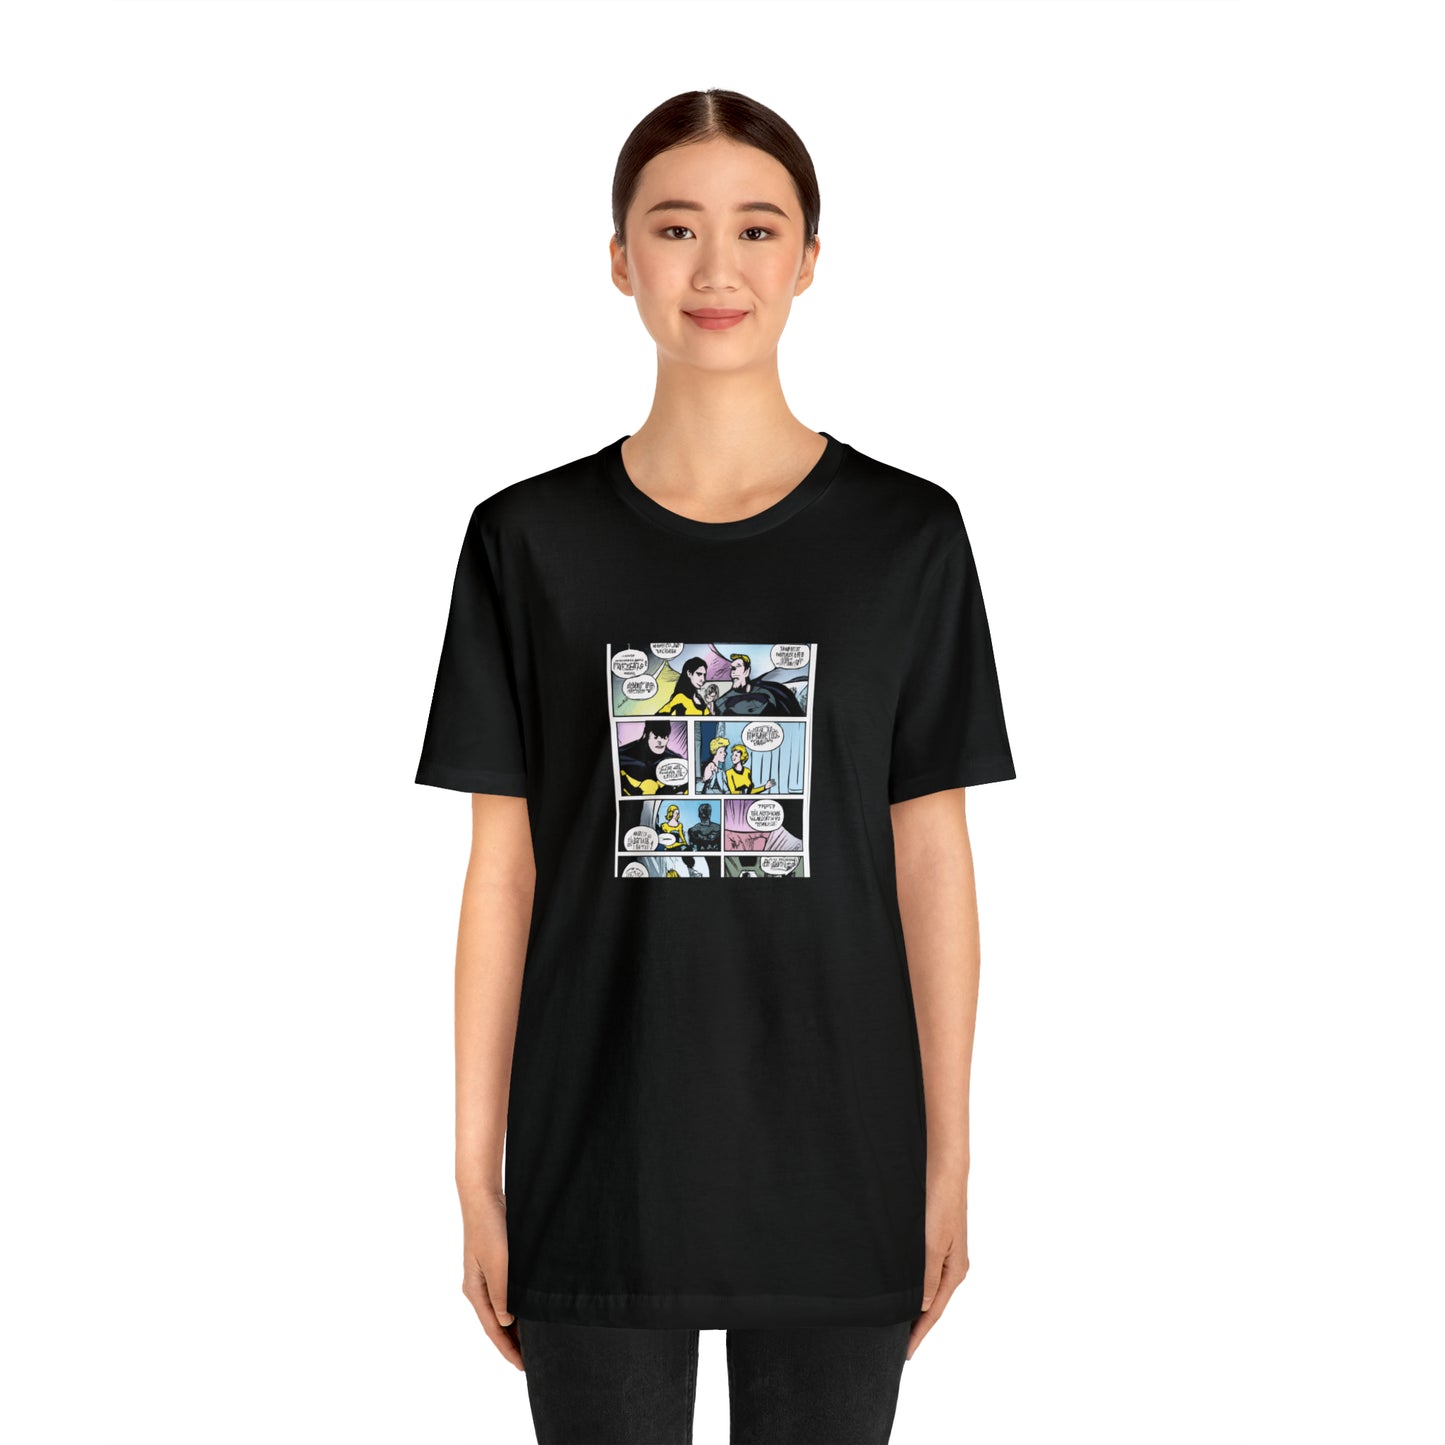 Claude Dior - Comic Book Collector Tee Shirt